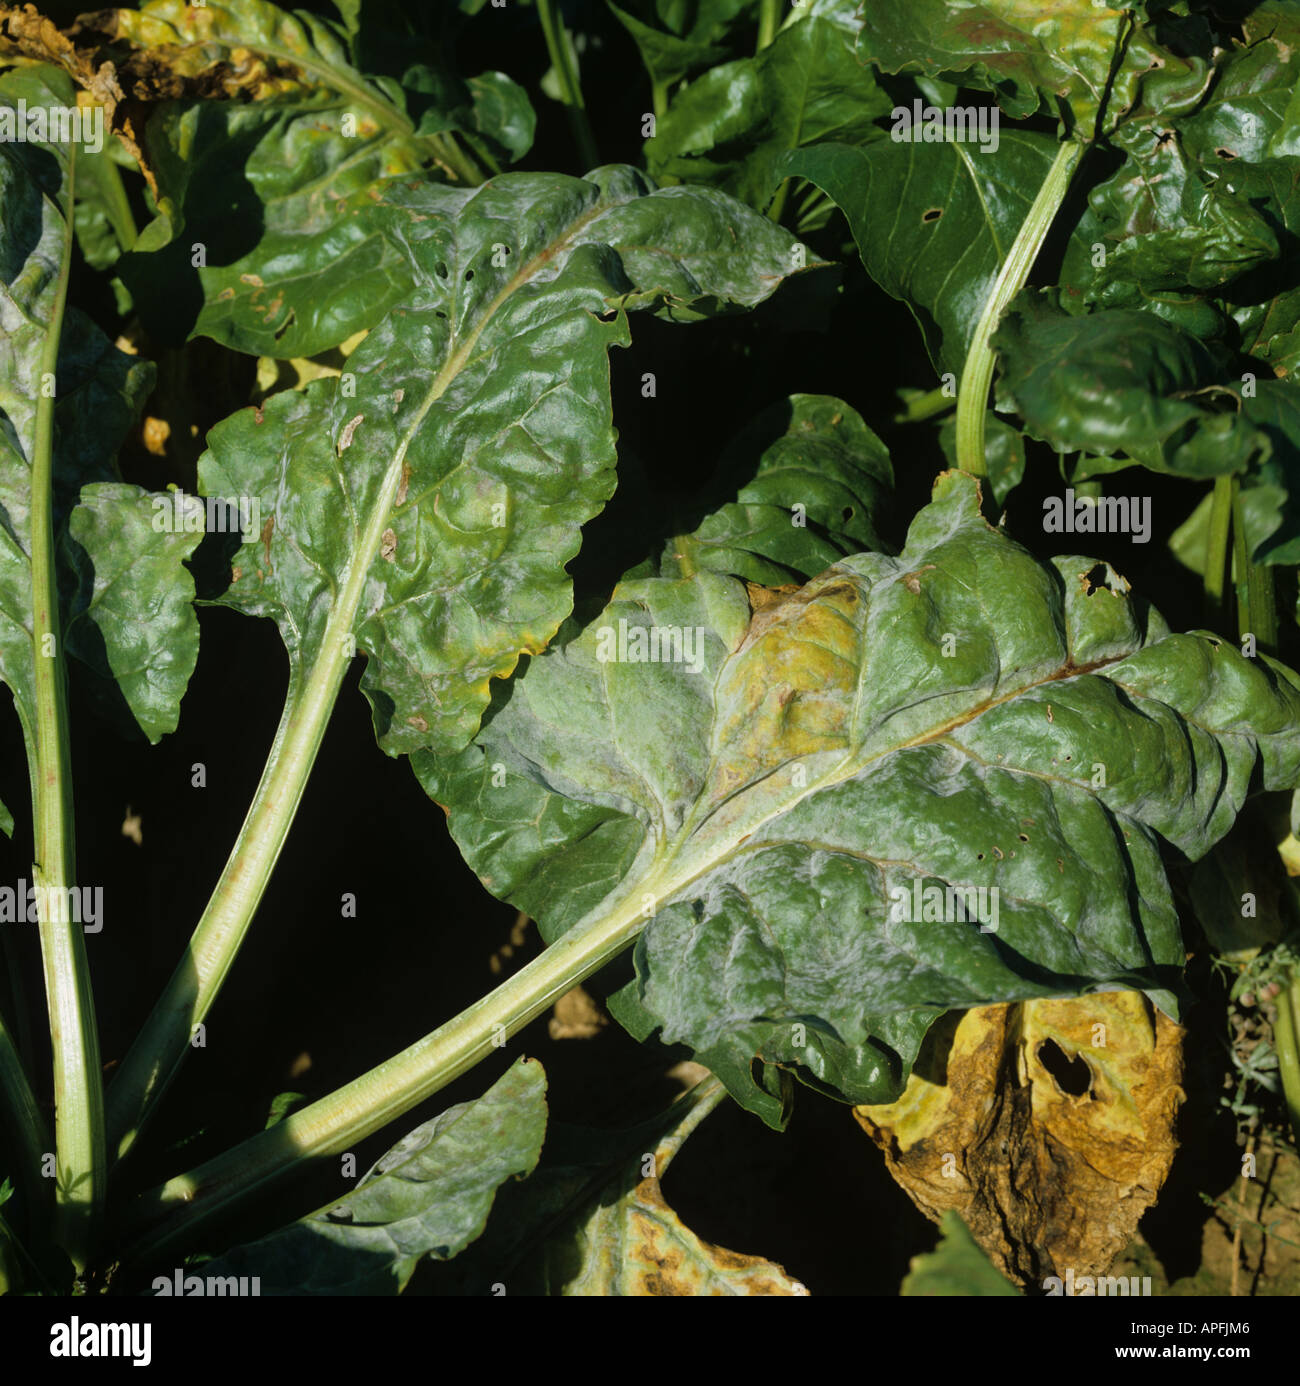 Powdery mildew Erysiphe betae infection on mature sugar beet leaves France Stock Photo